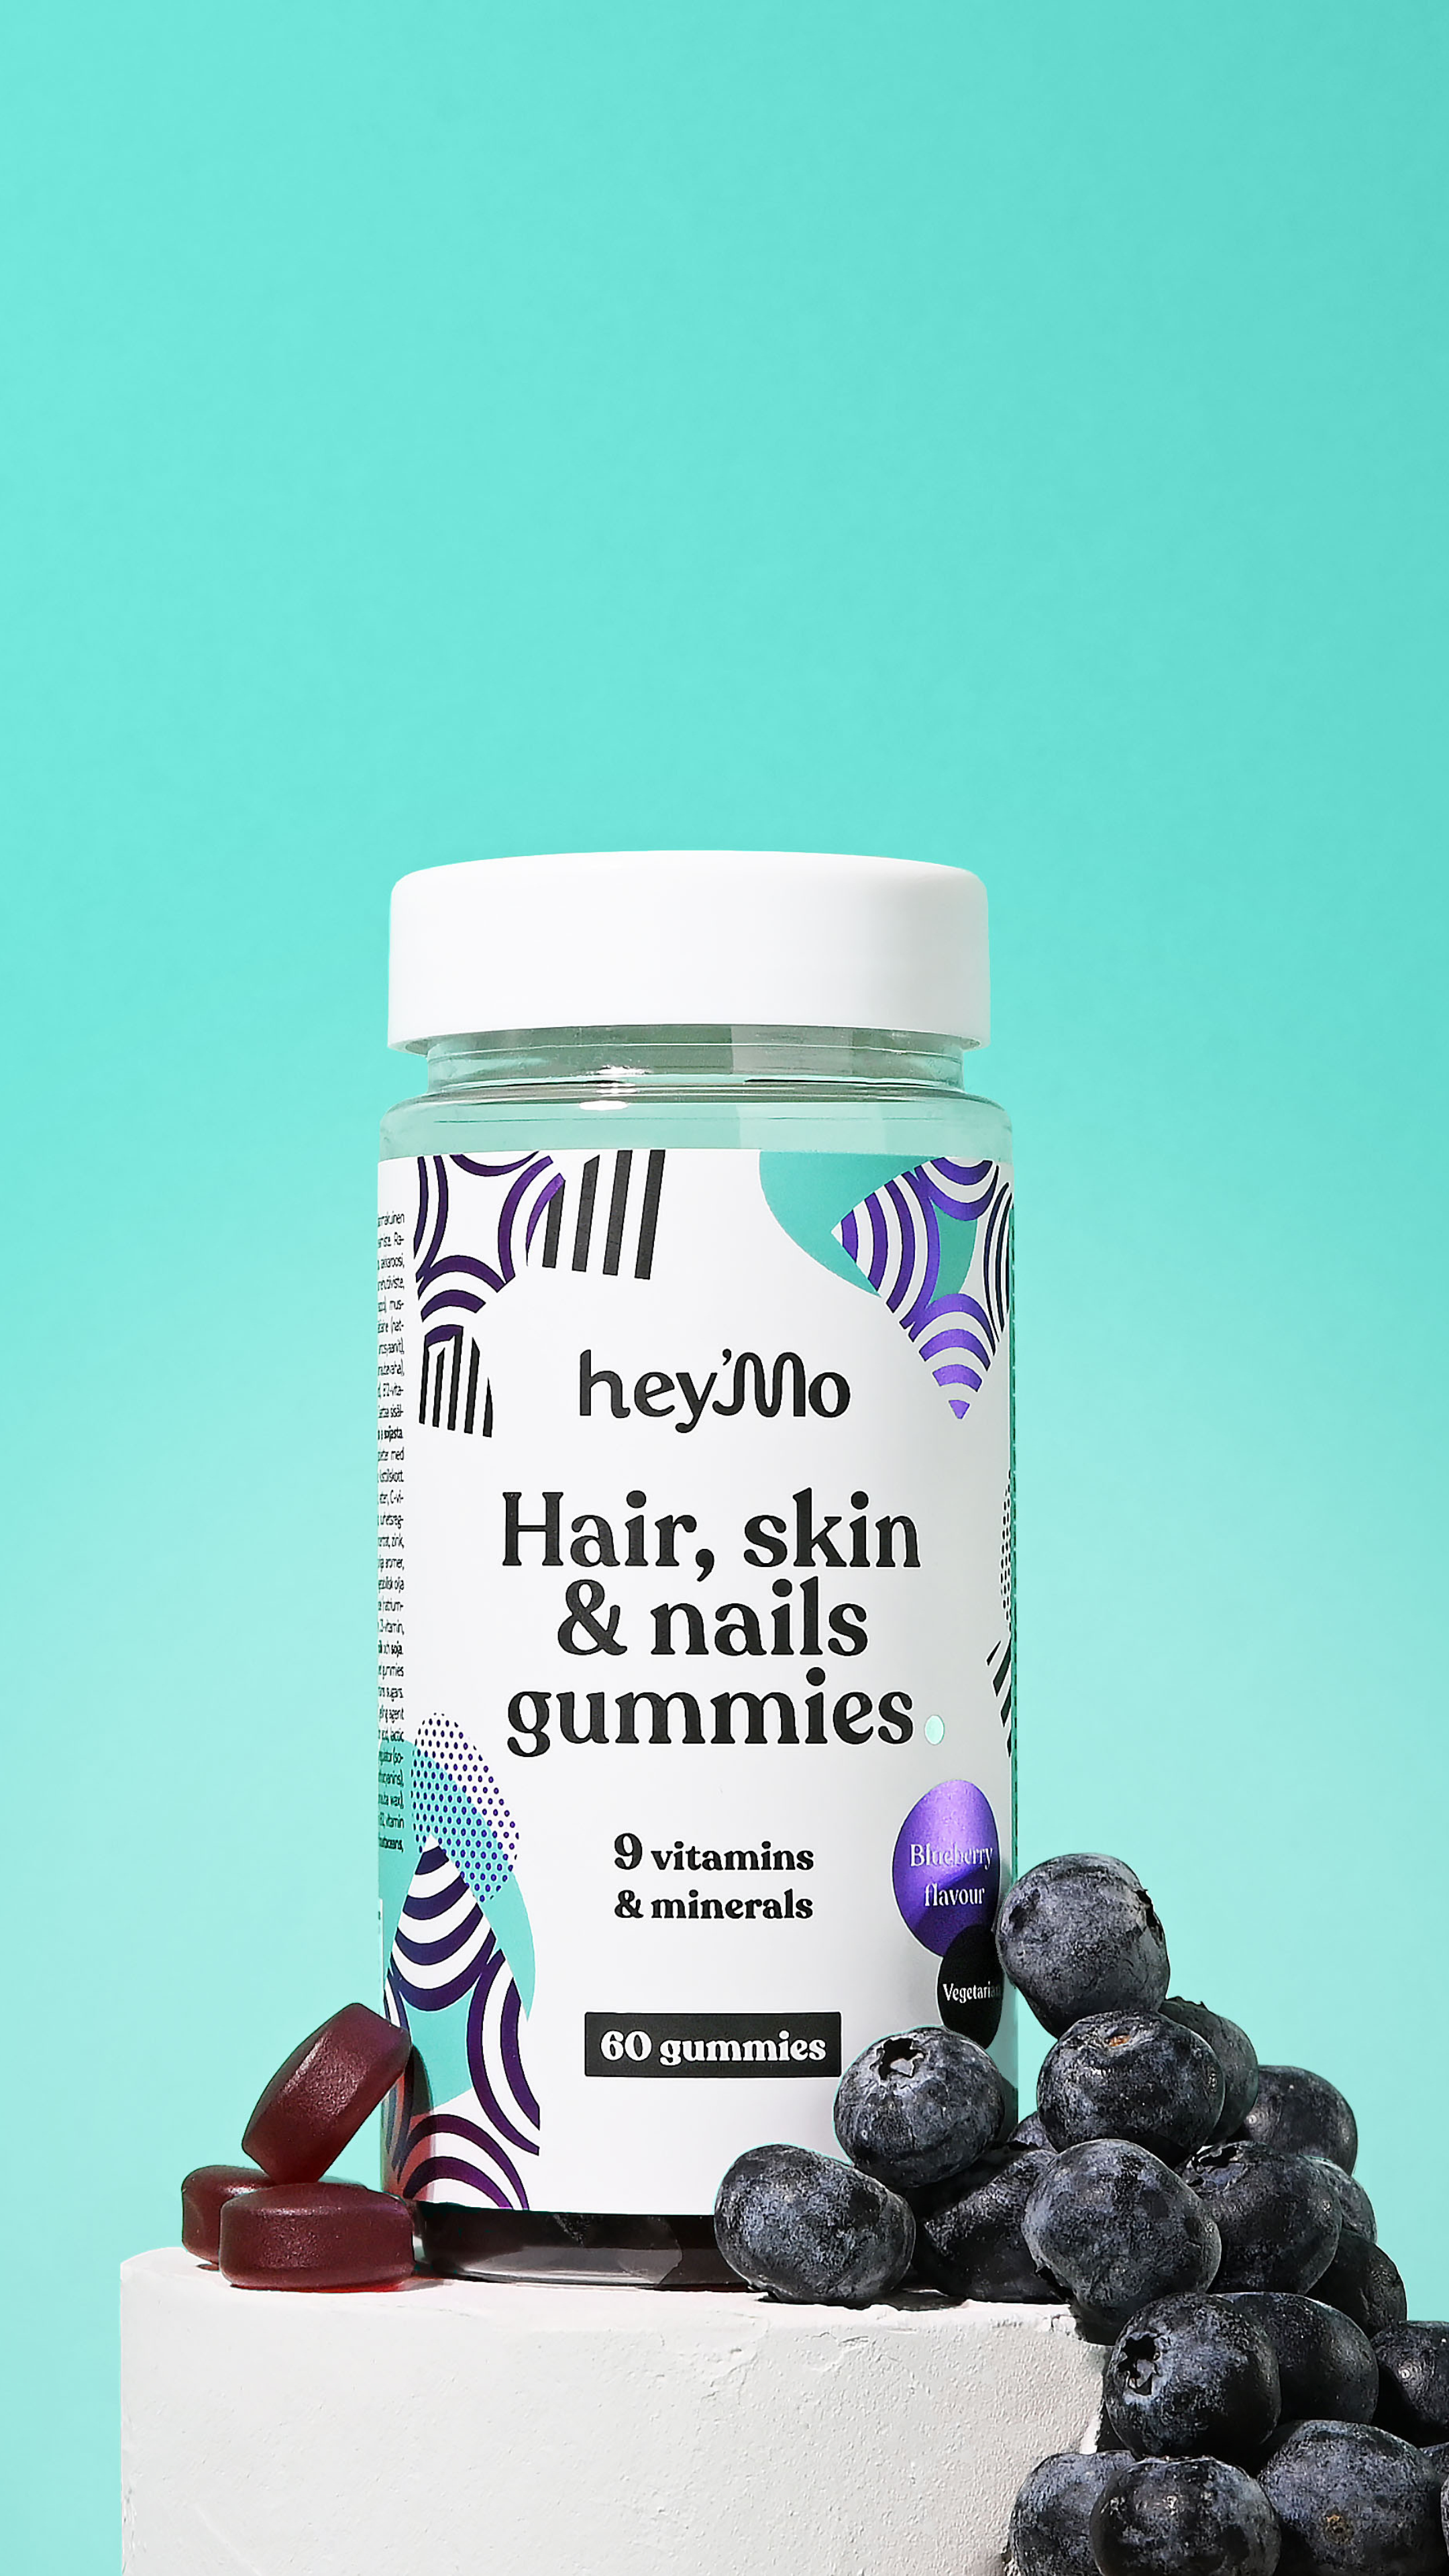 hey'Mo Blueberry Flavored Hair, Skin & Nails Gummies